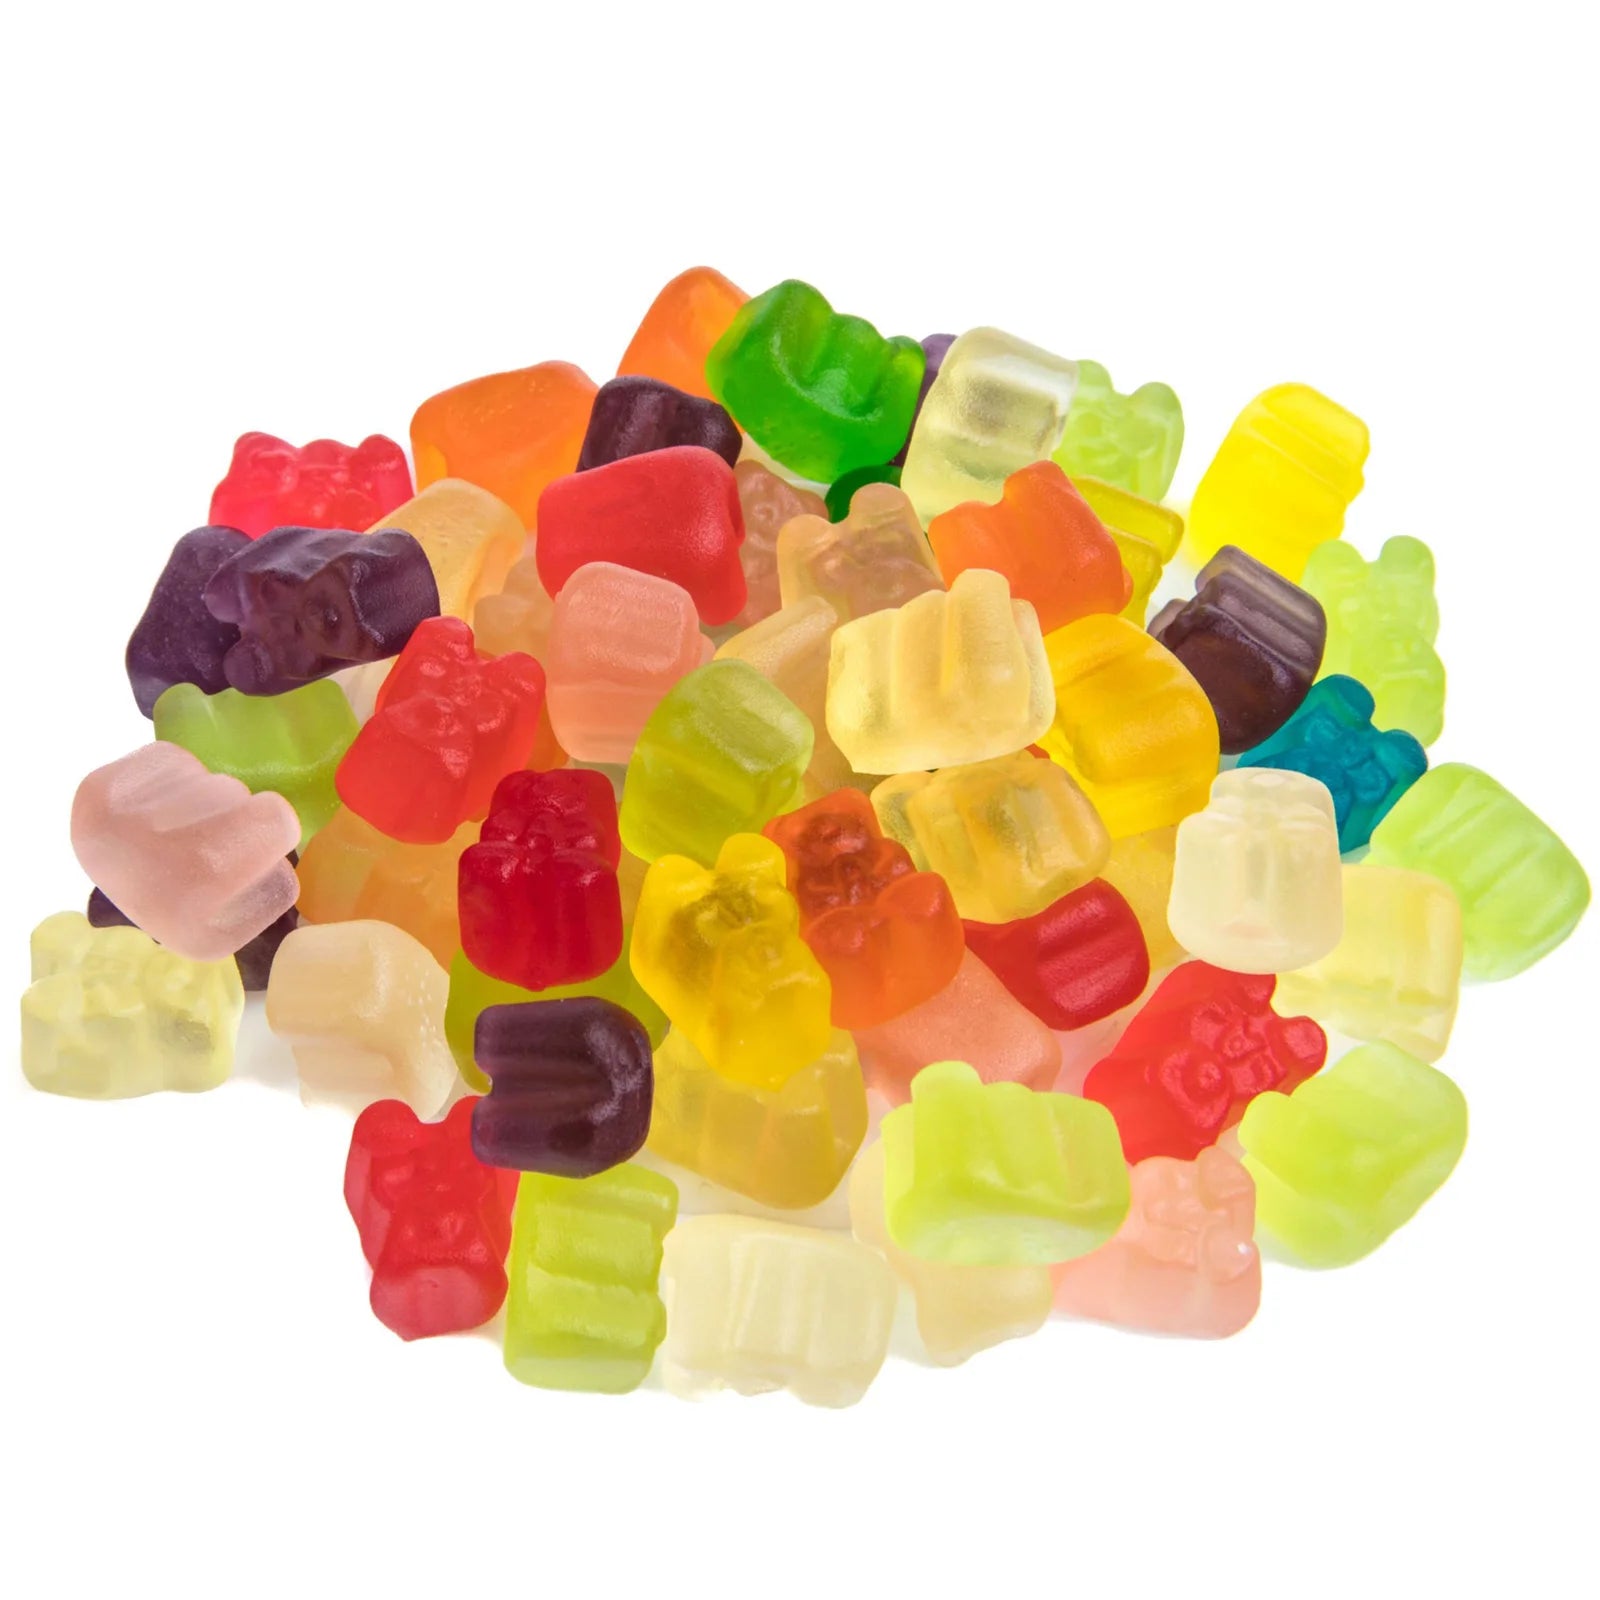 Gummi Bear Cubs